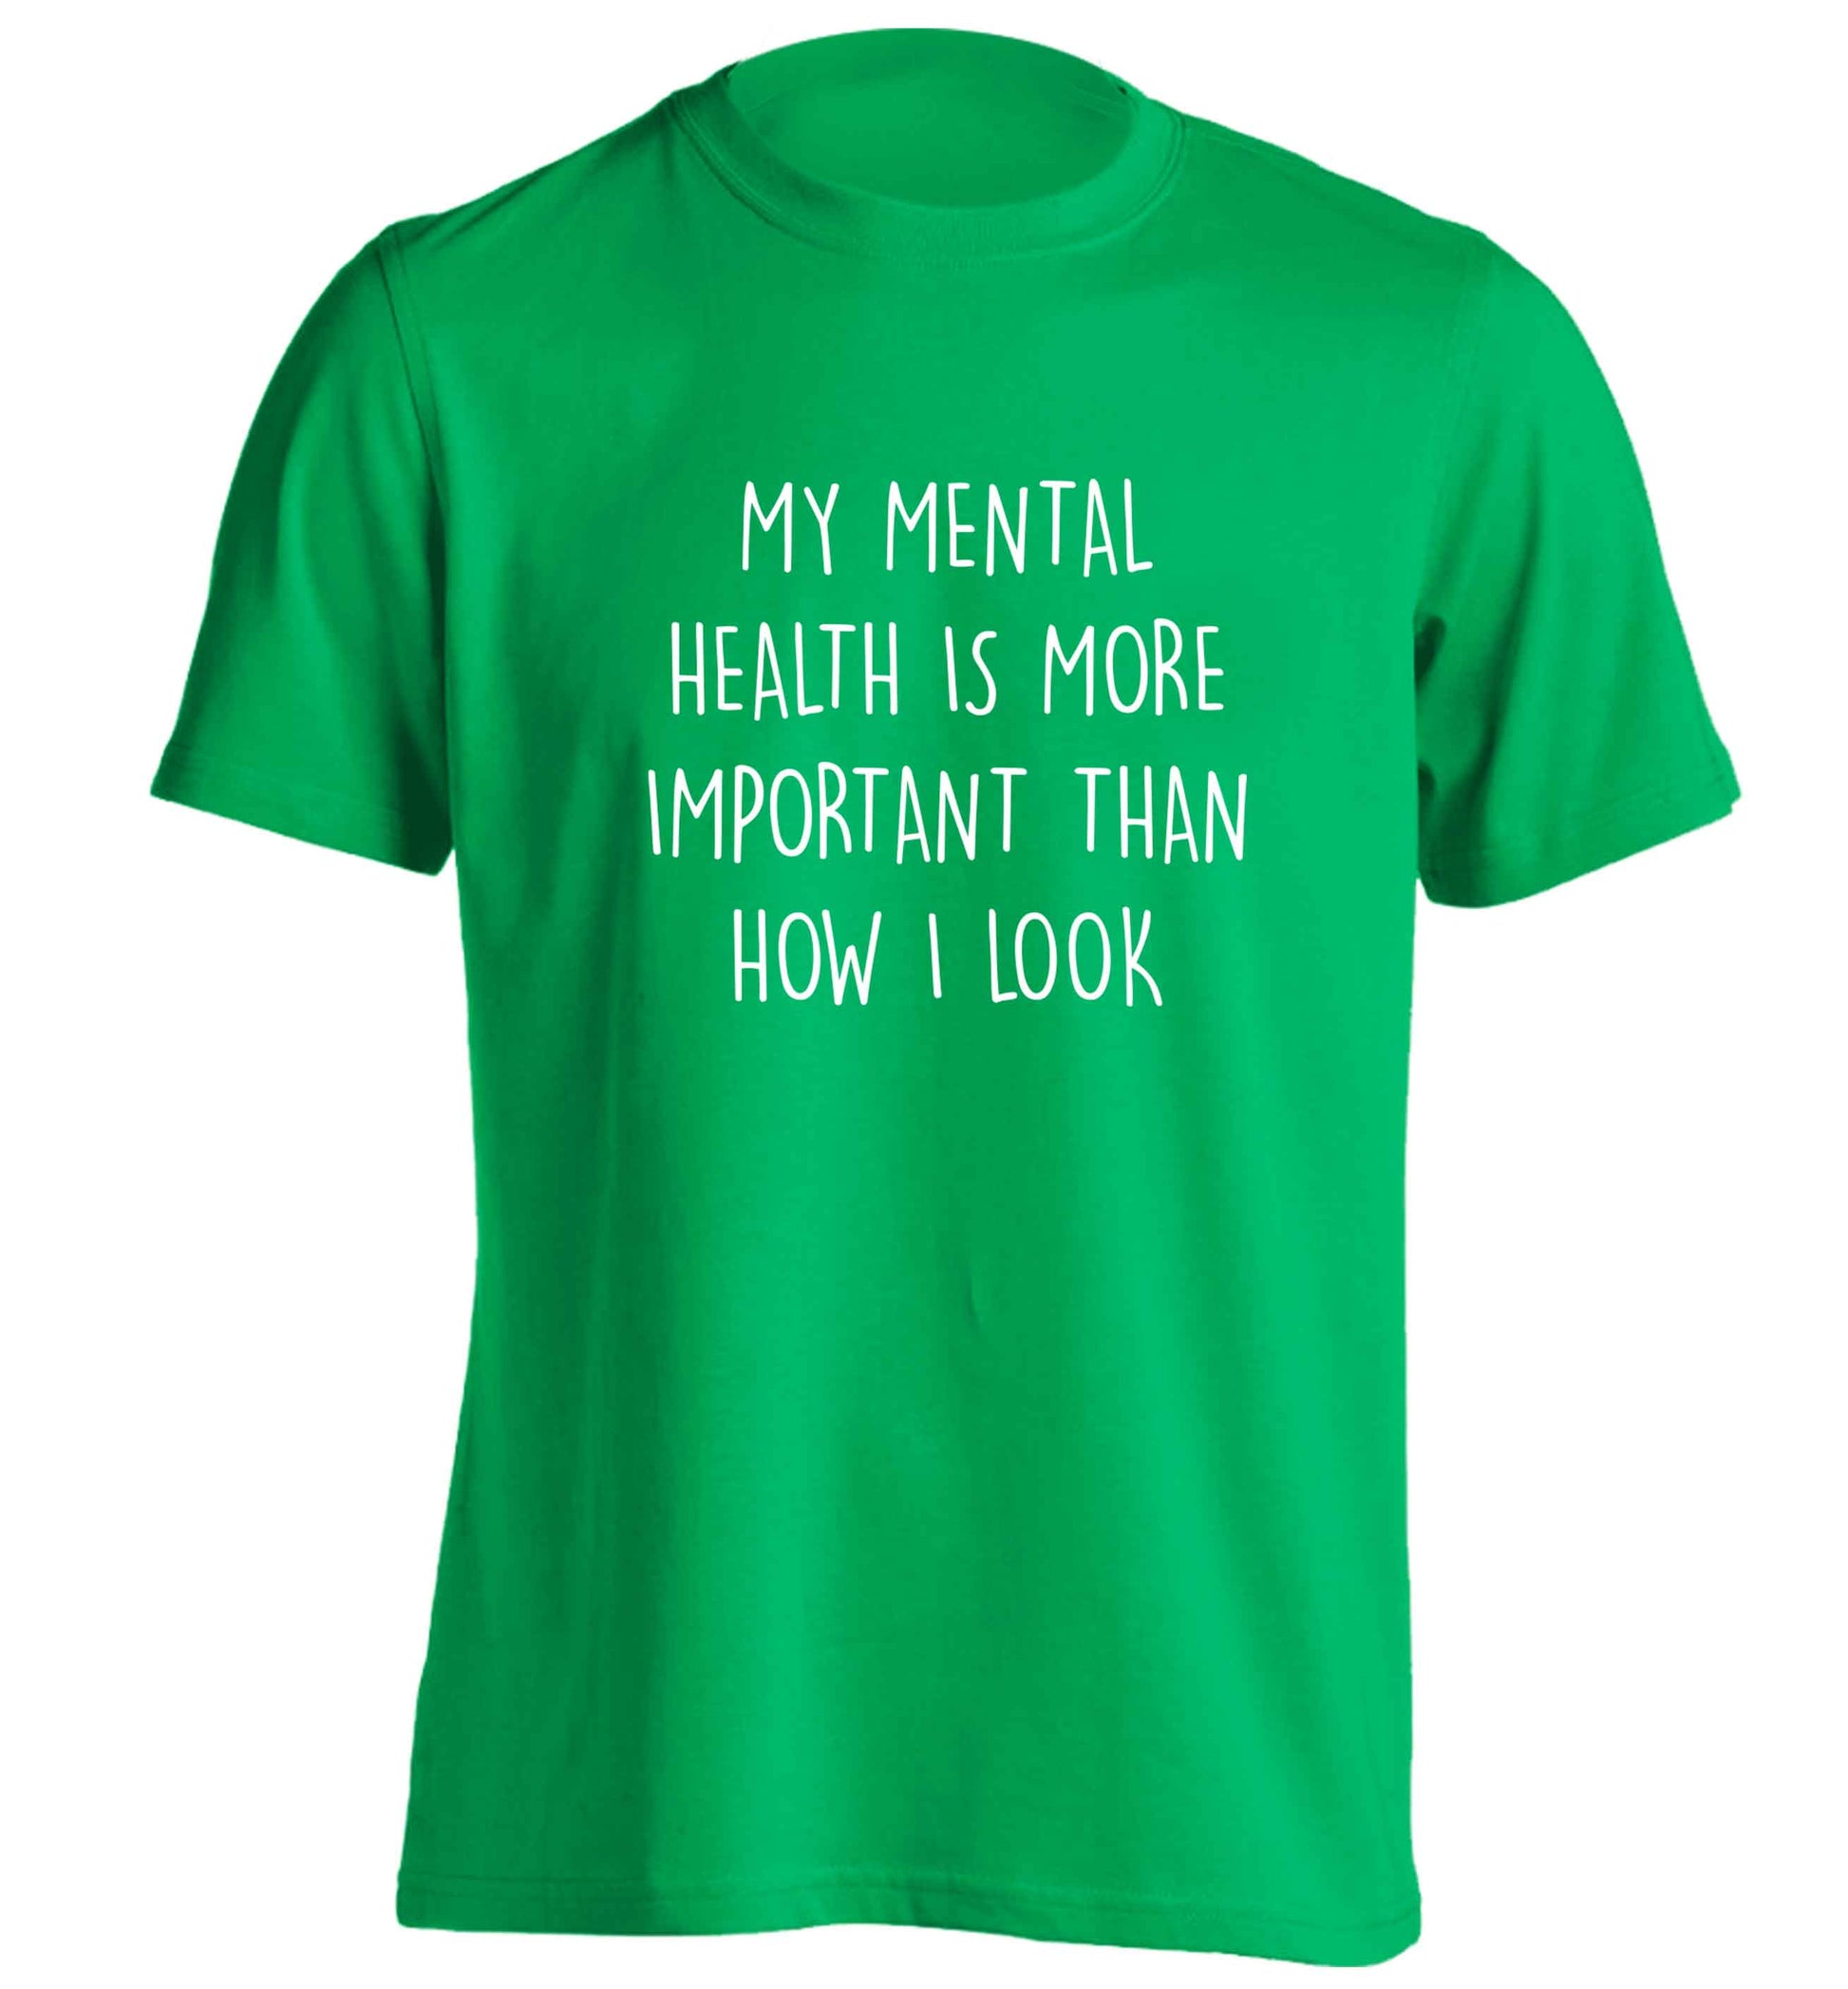 My mental health is more importnat than how I look adults unisex green Tshirt 2XL